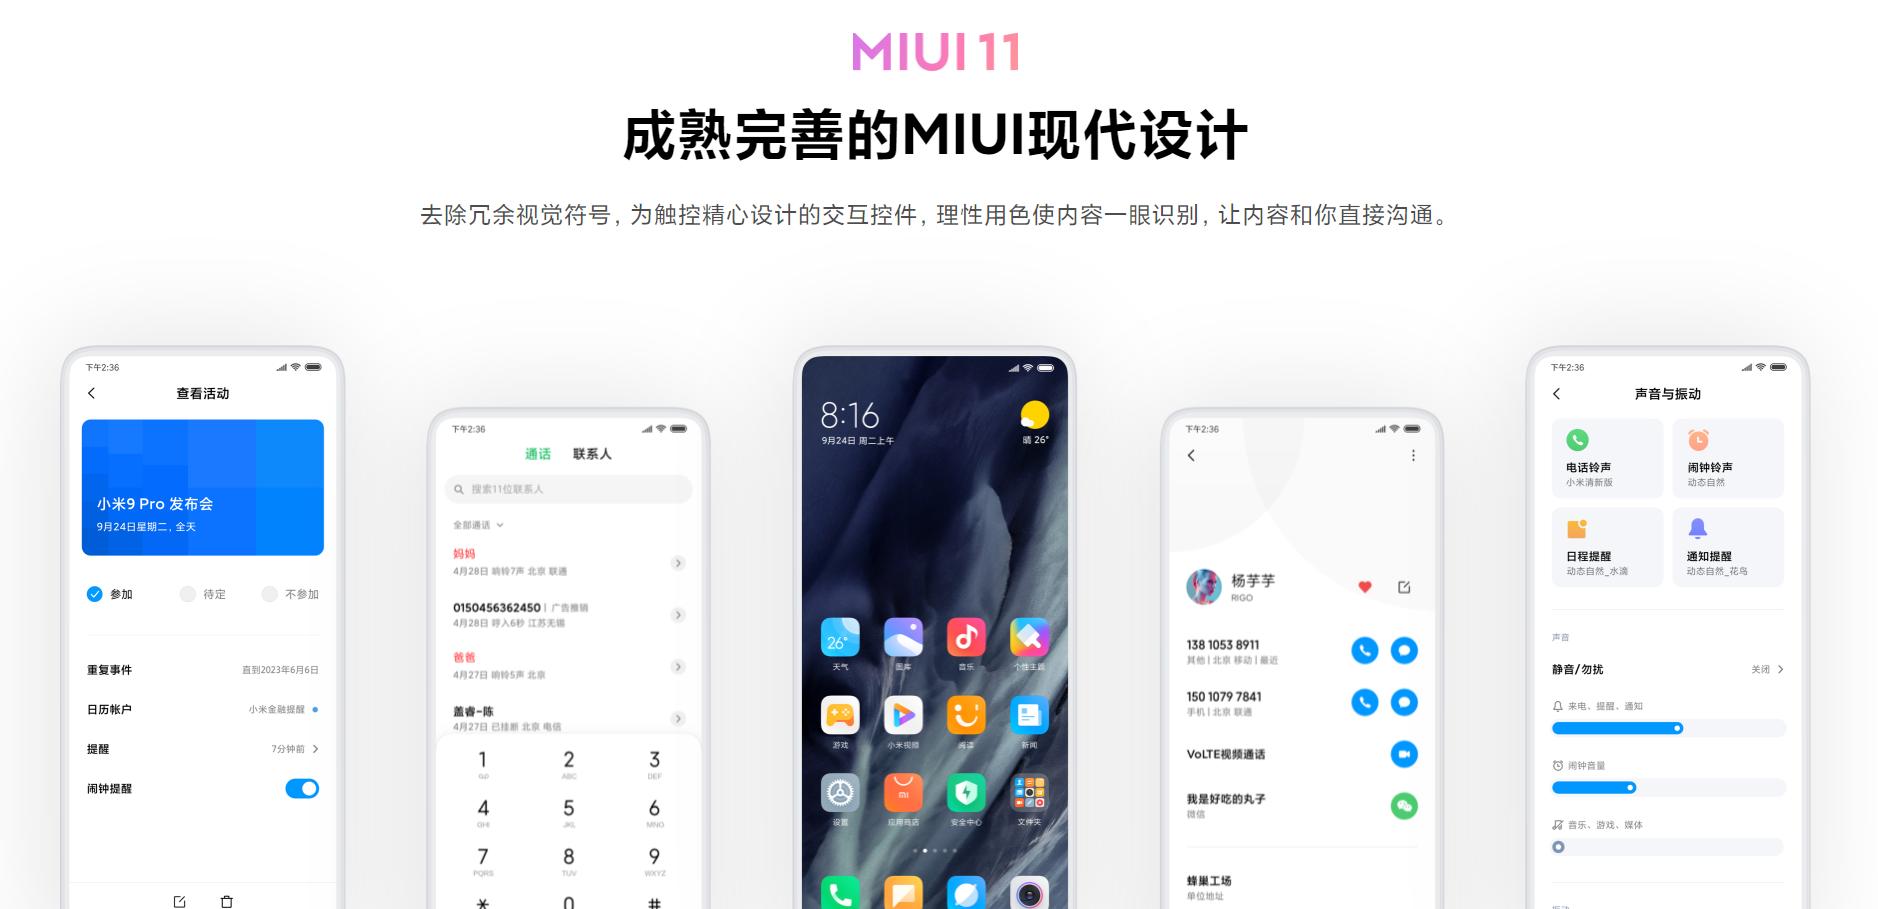 Последняя Версия Miui Для Xiaomi